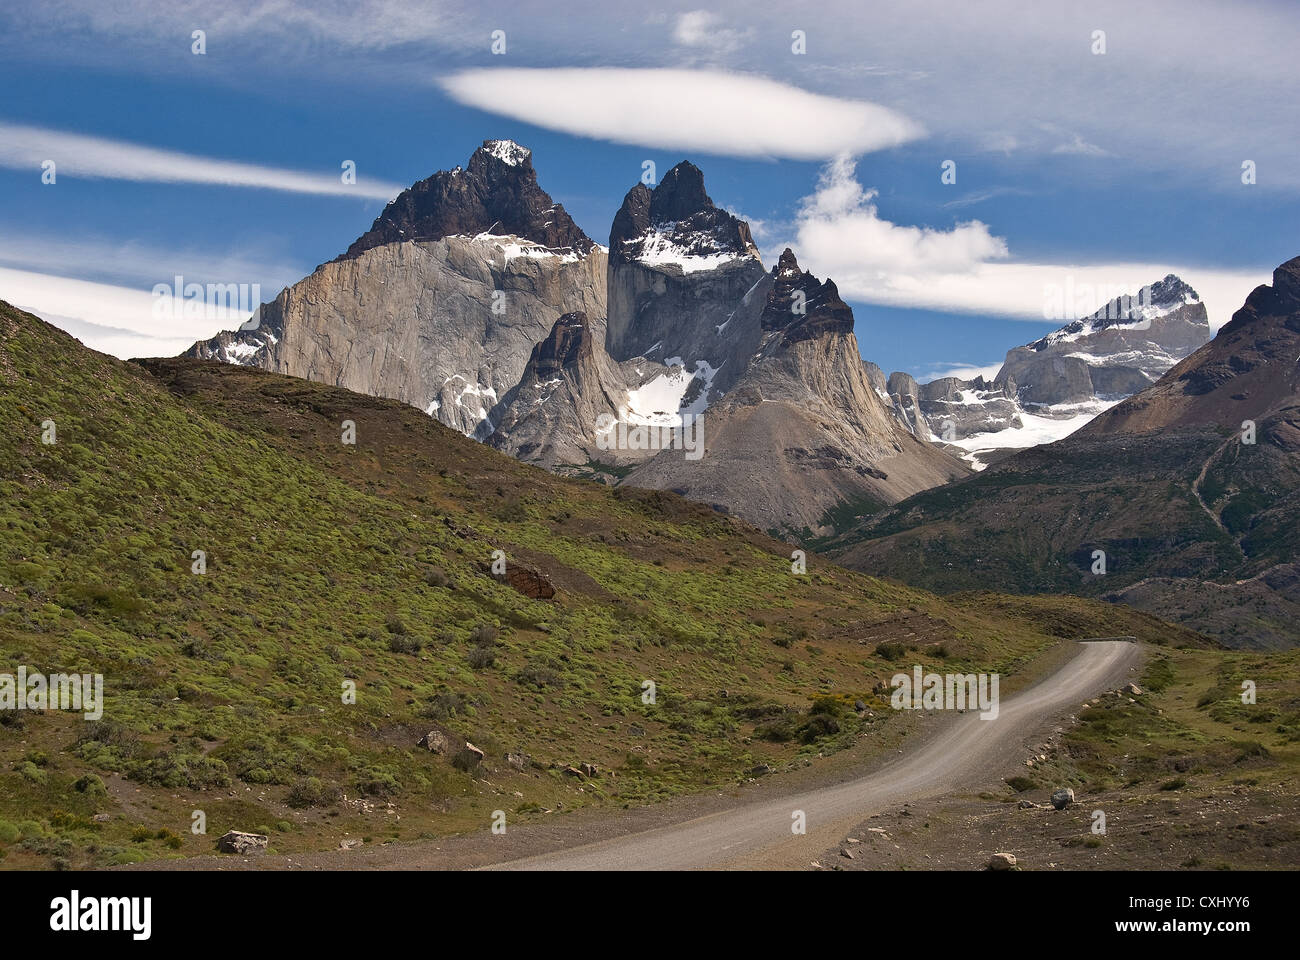 Elk198-4521 Chili, le Parc National Torres del Paine, Lago Nordenskjold avec Cuernos massif & Park road Banque D'Images